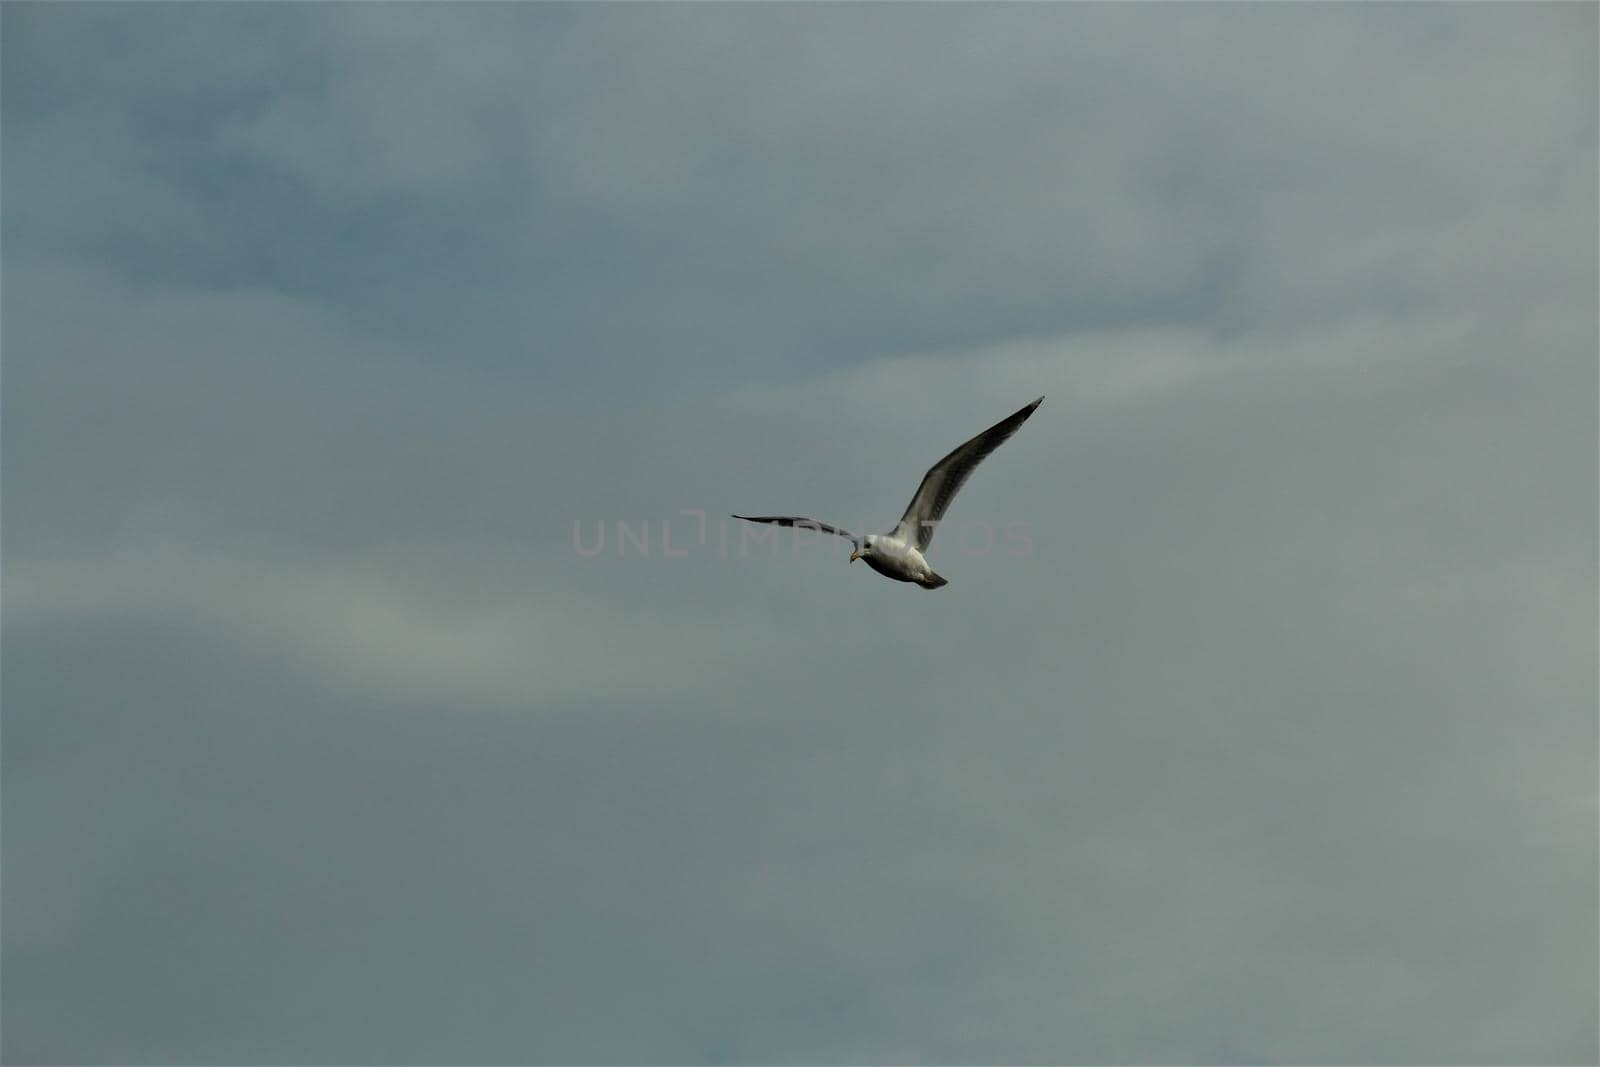 A seagull in flight aginst a cloudy sky